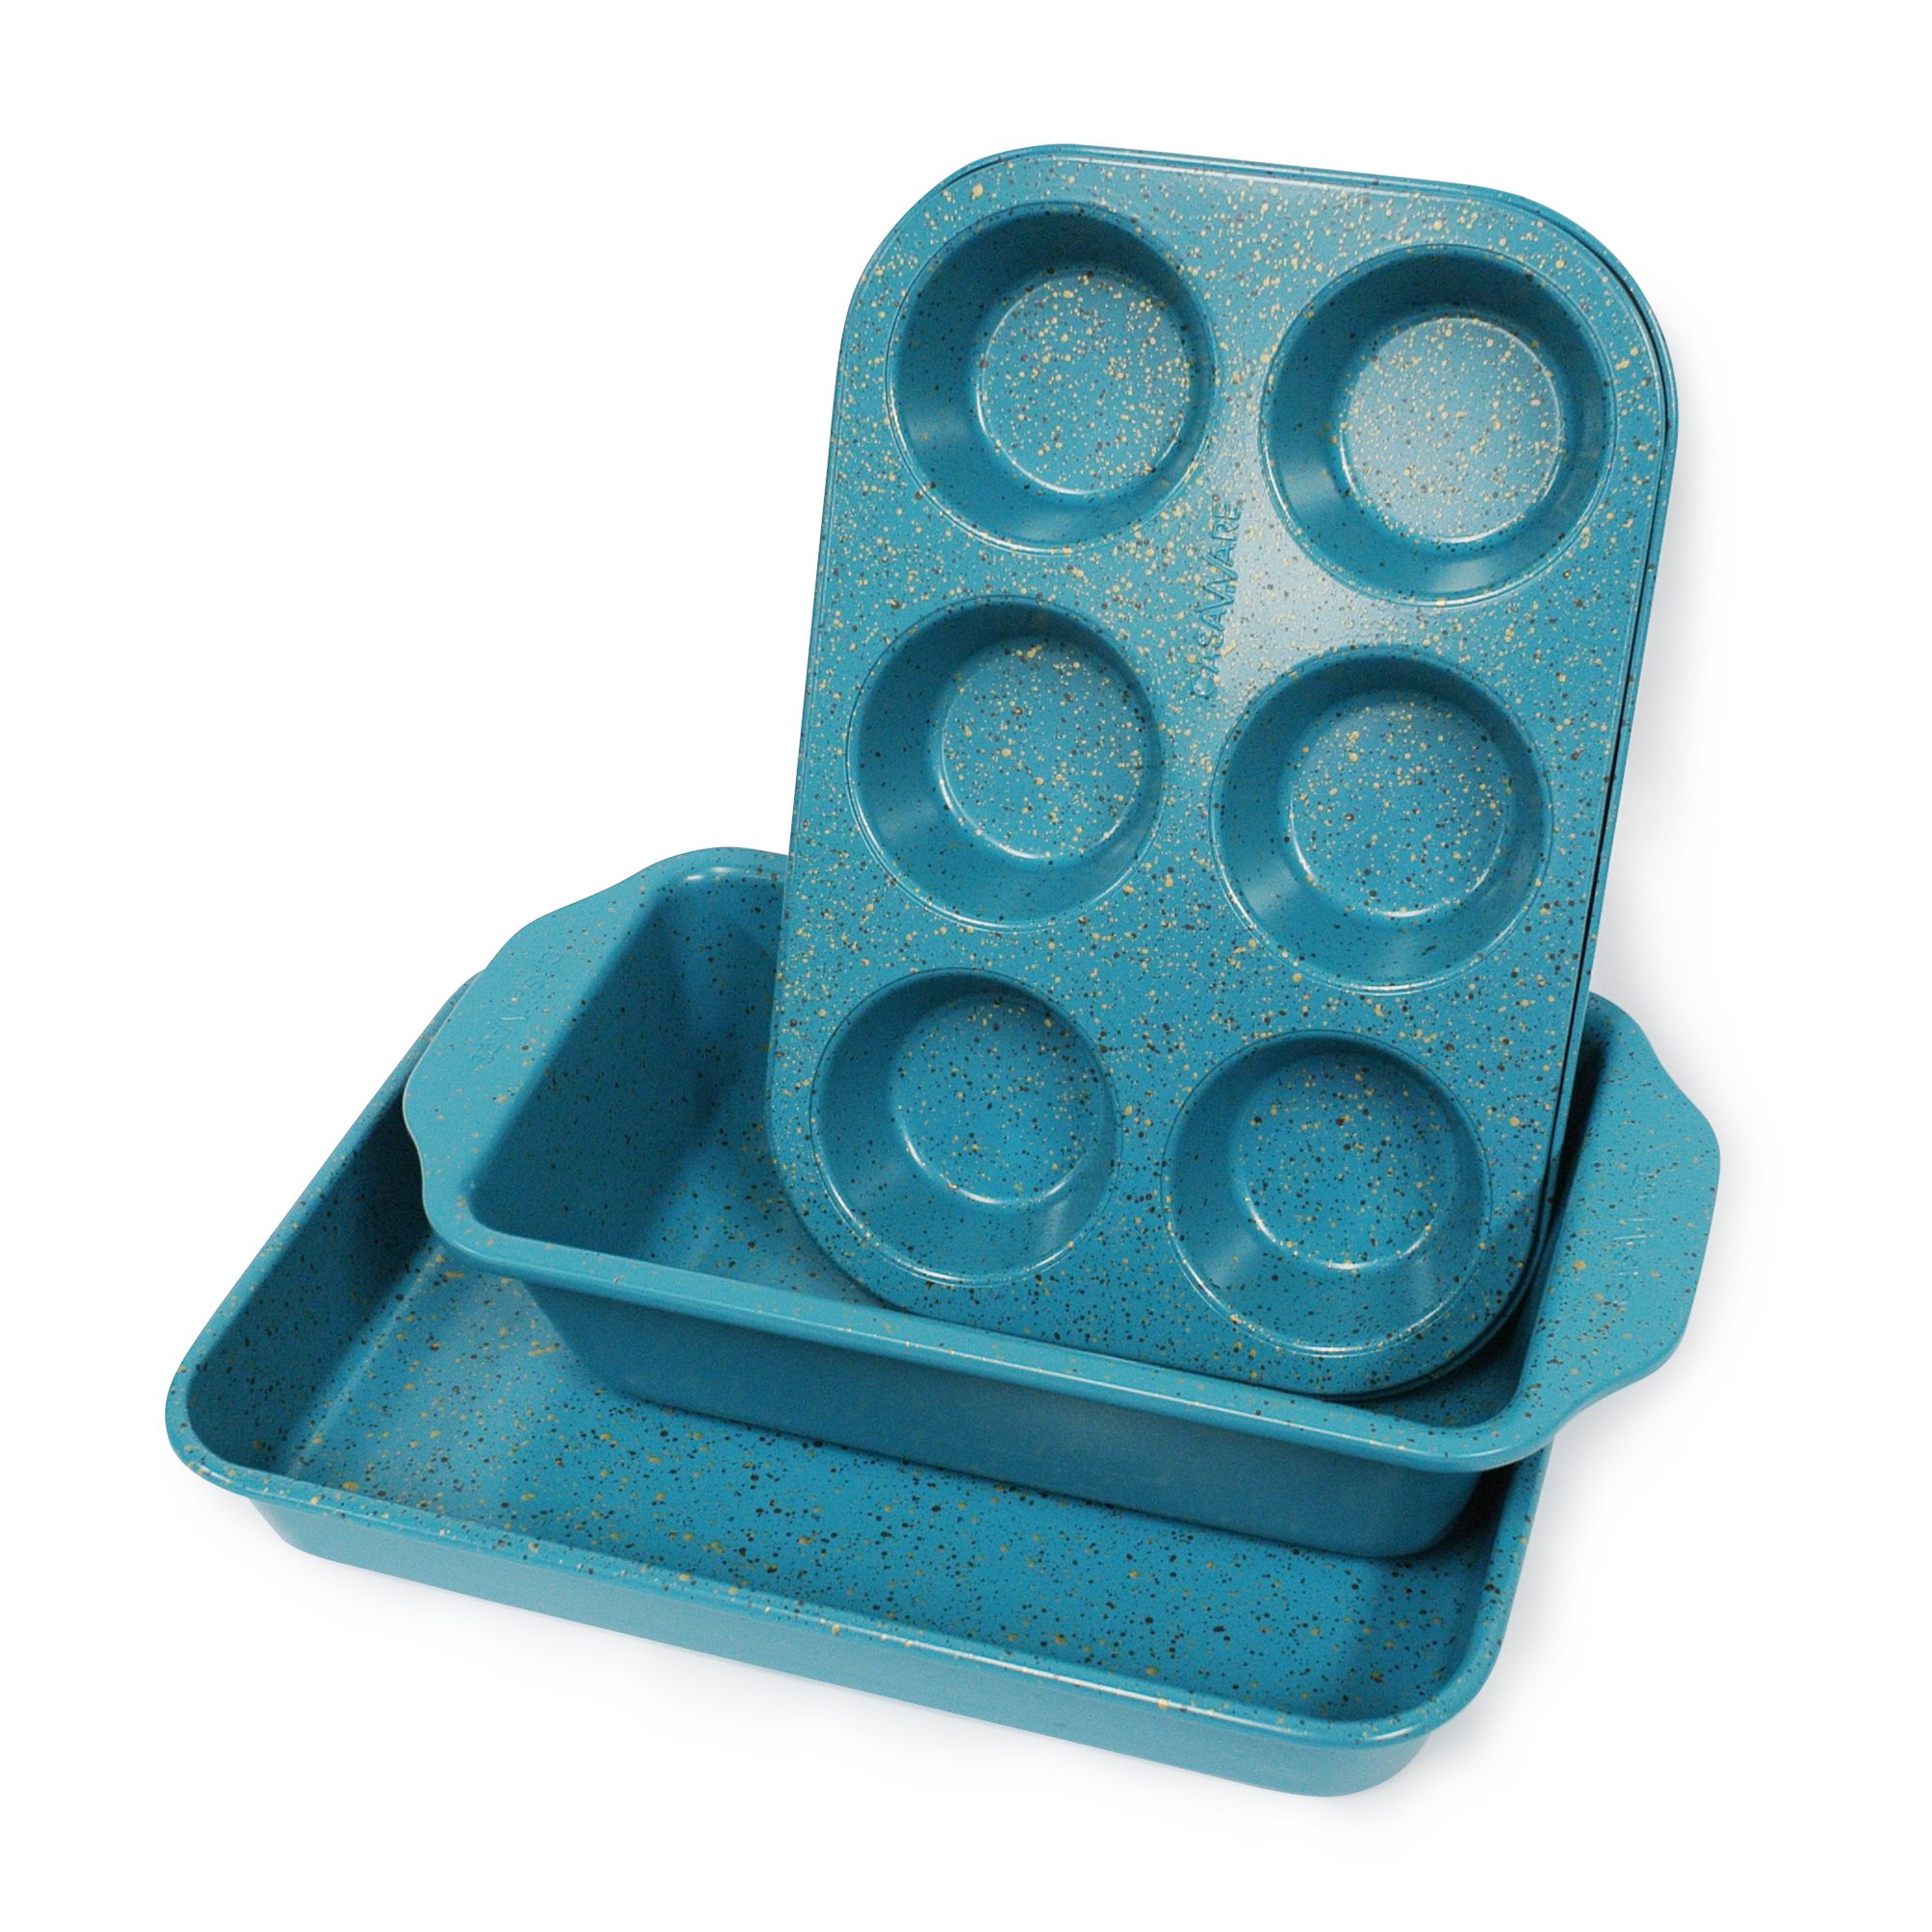 casaWare Toaster Oven 3-Piece Set (Blue - Granite)